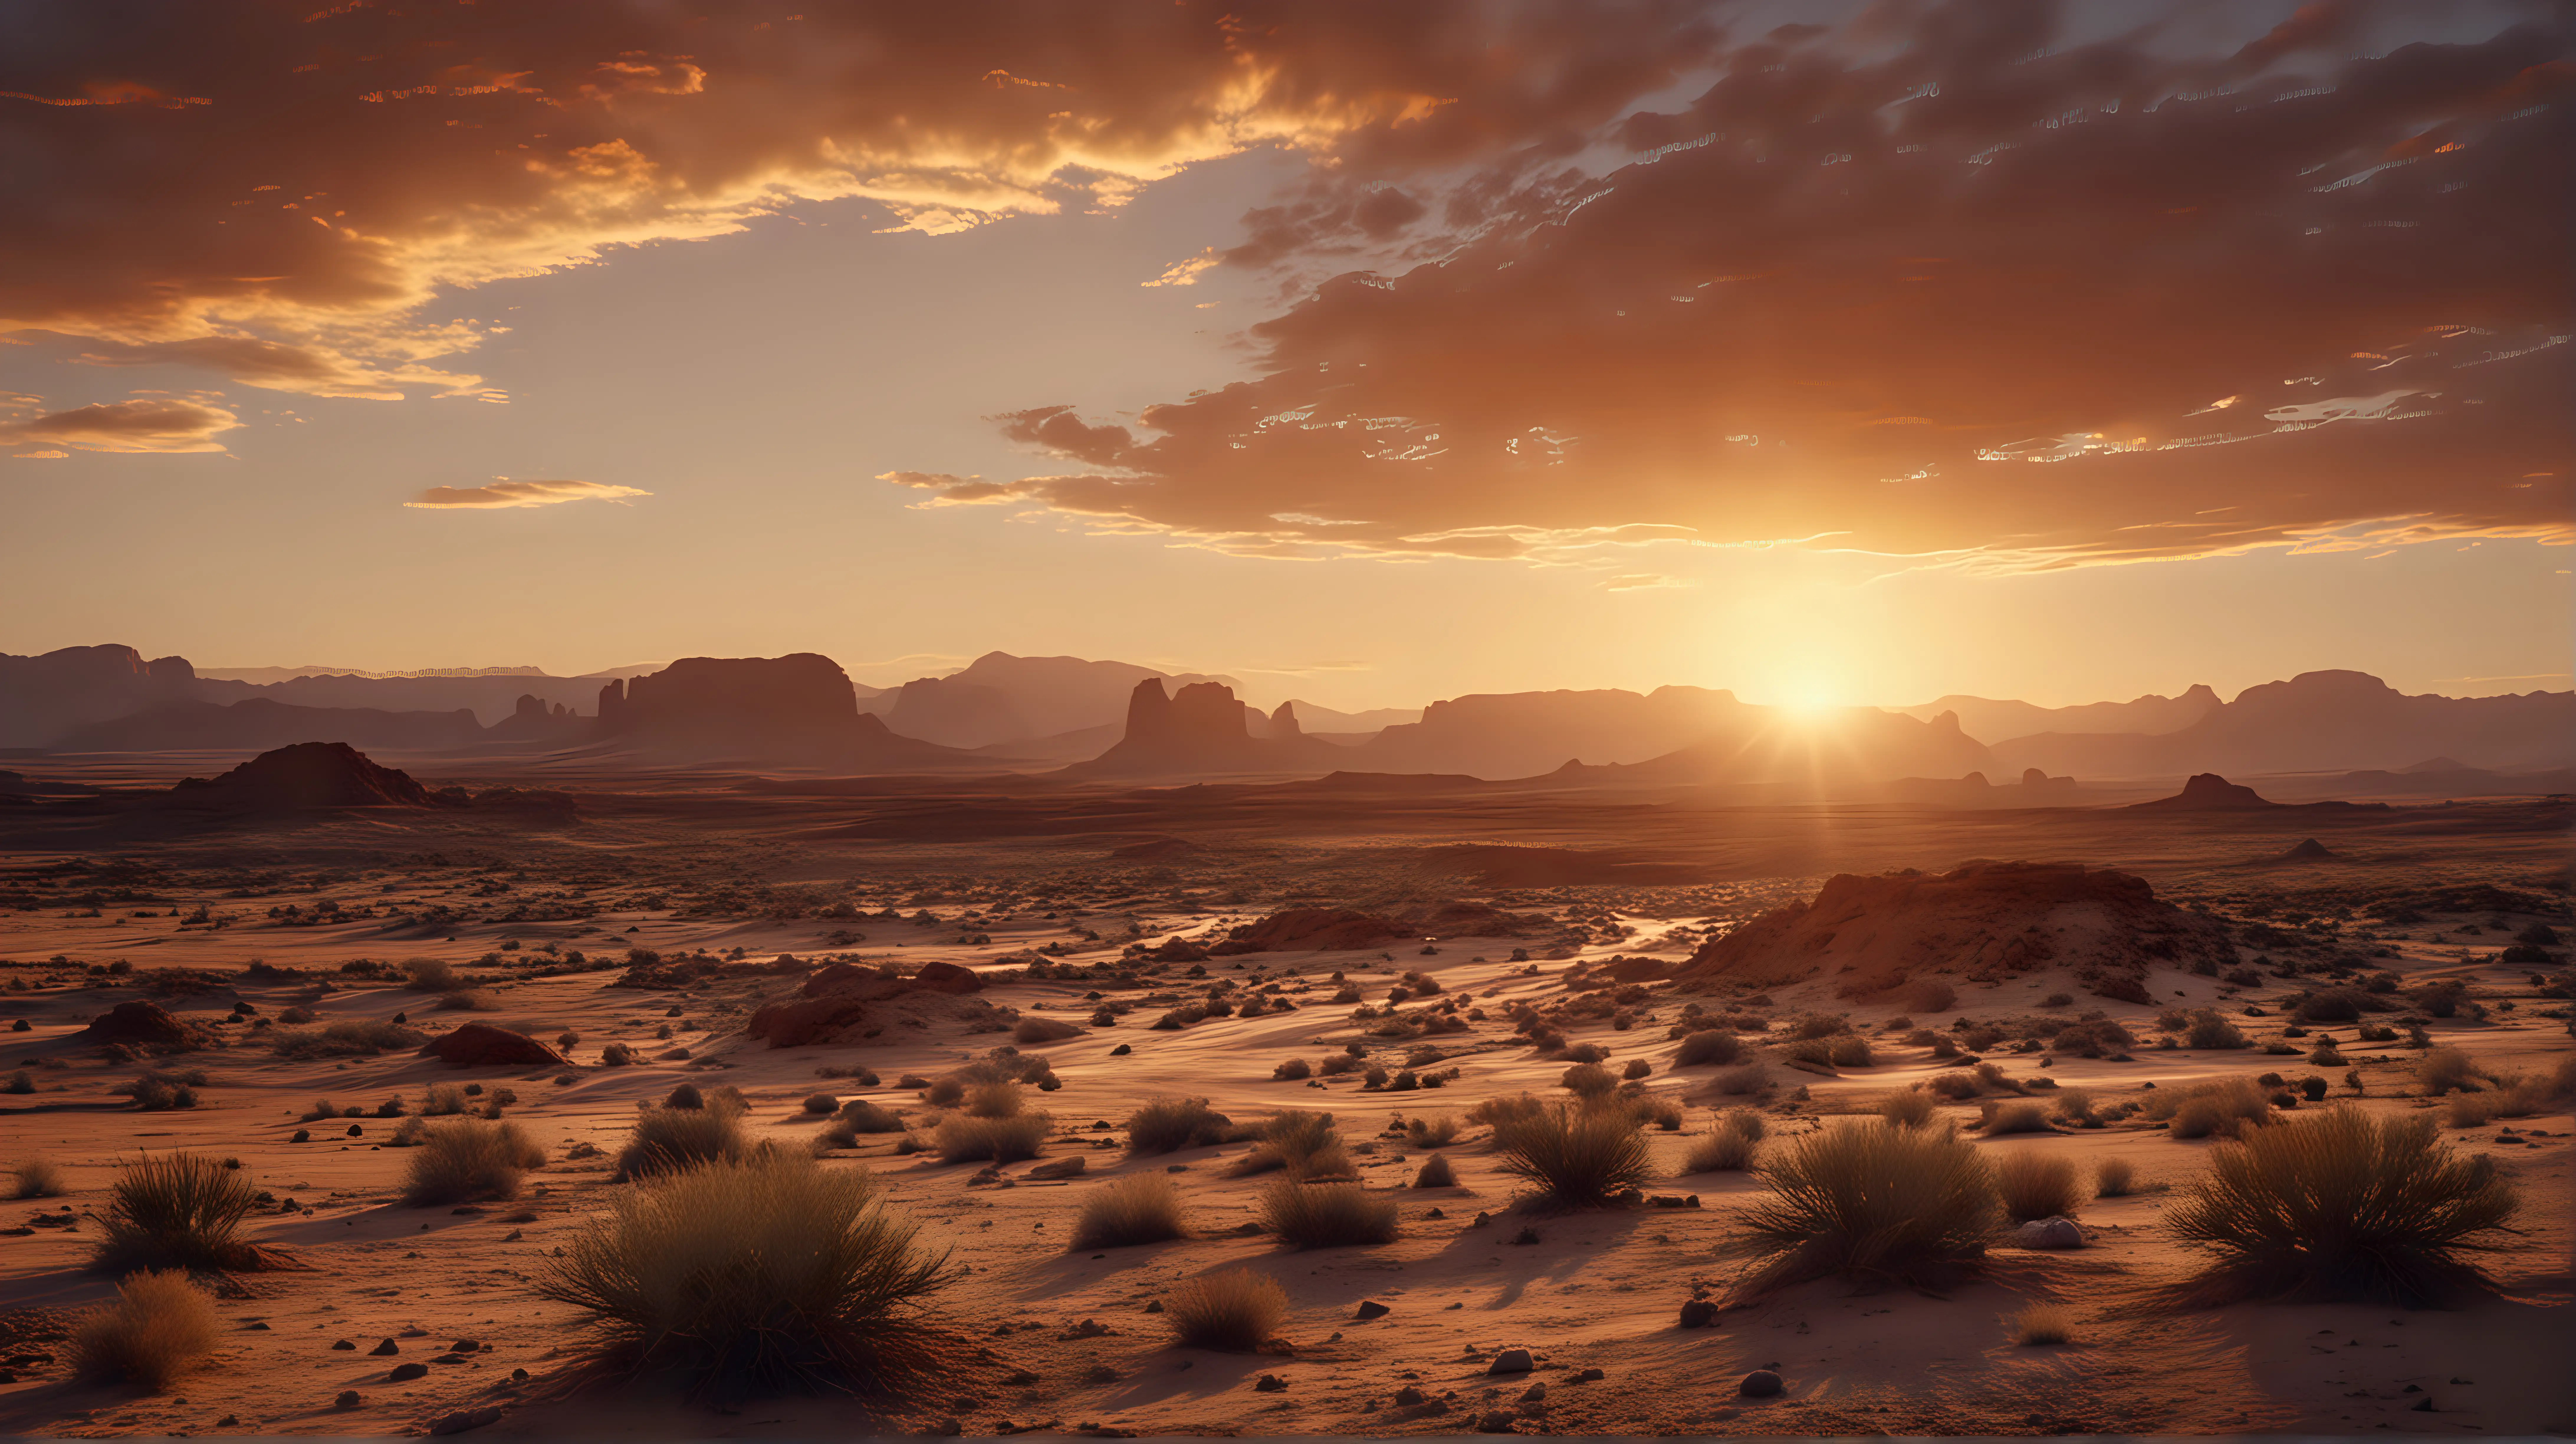 Cinematic American Desert Sunset Landscape